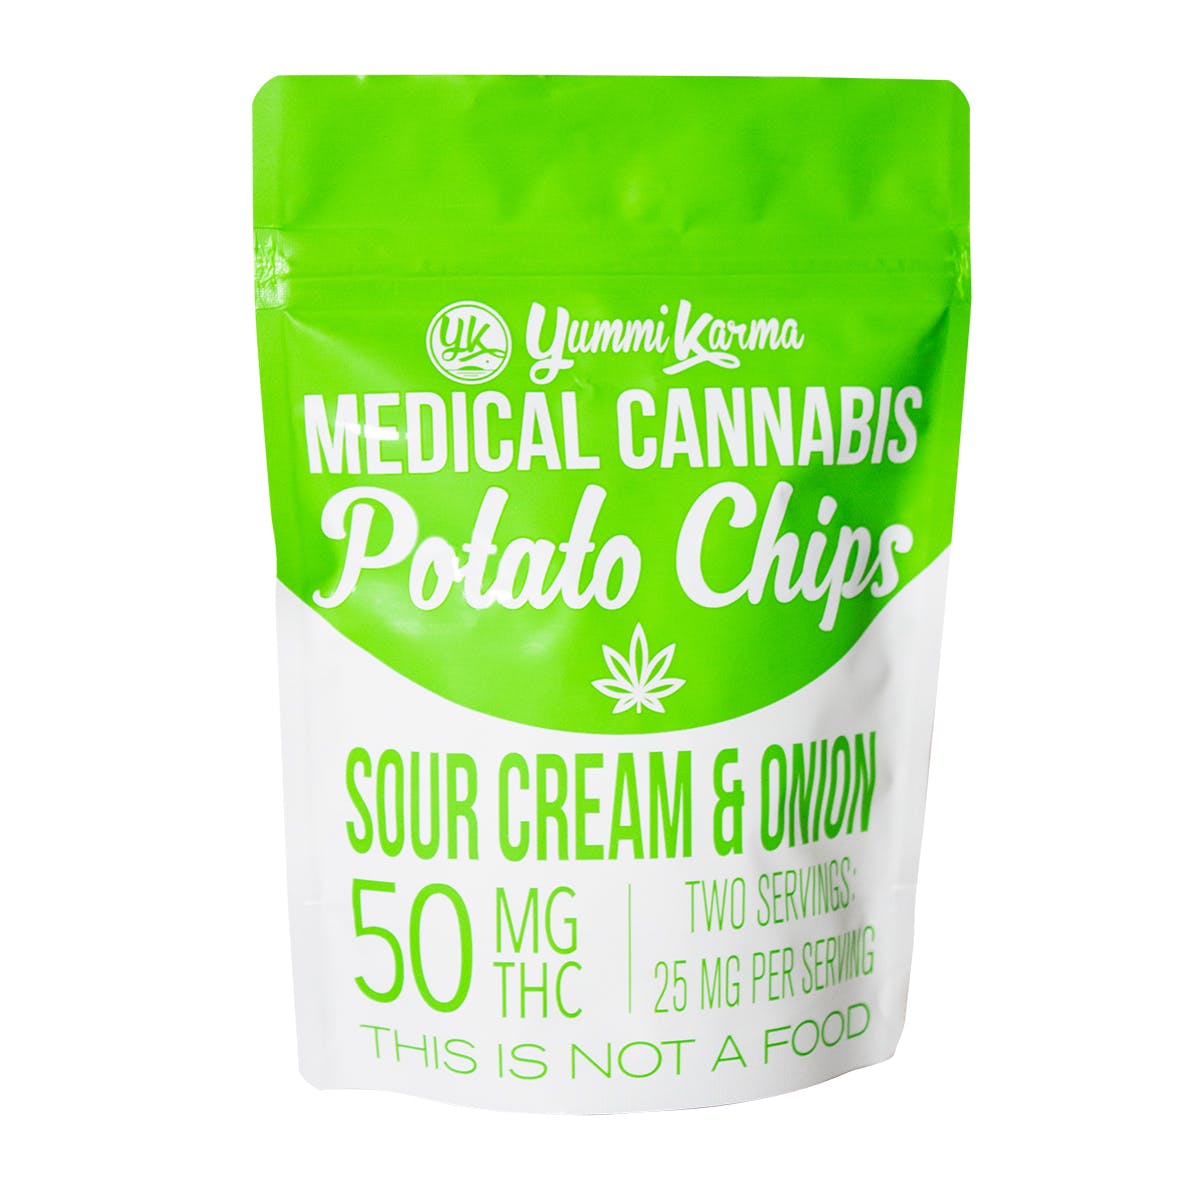 Medical Cannabis Potato Chips, Sour Cream & Onion